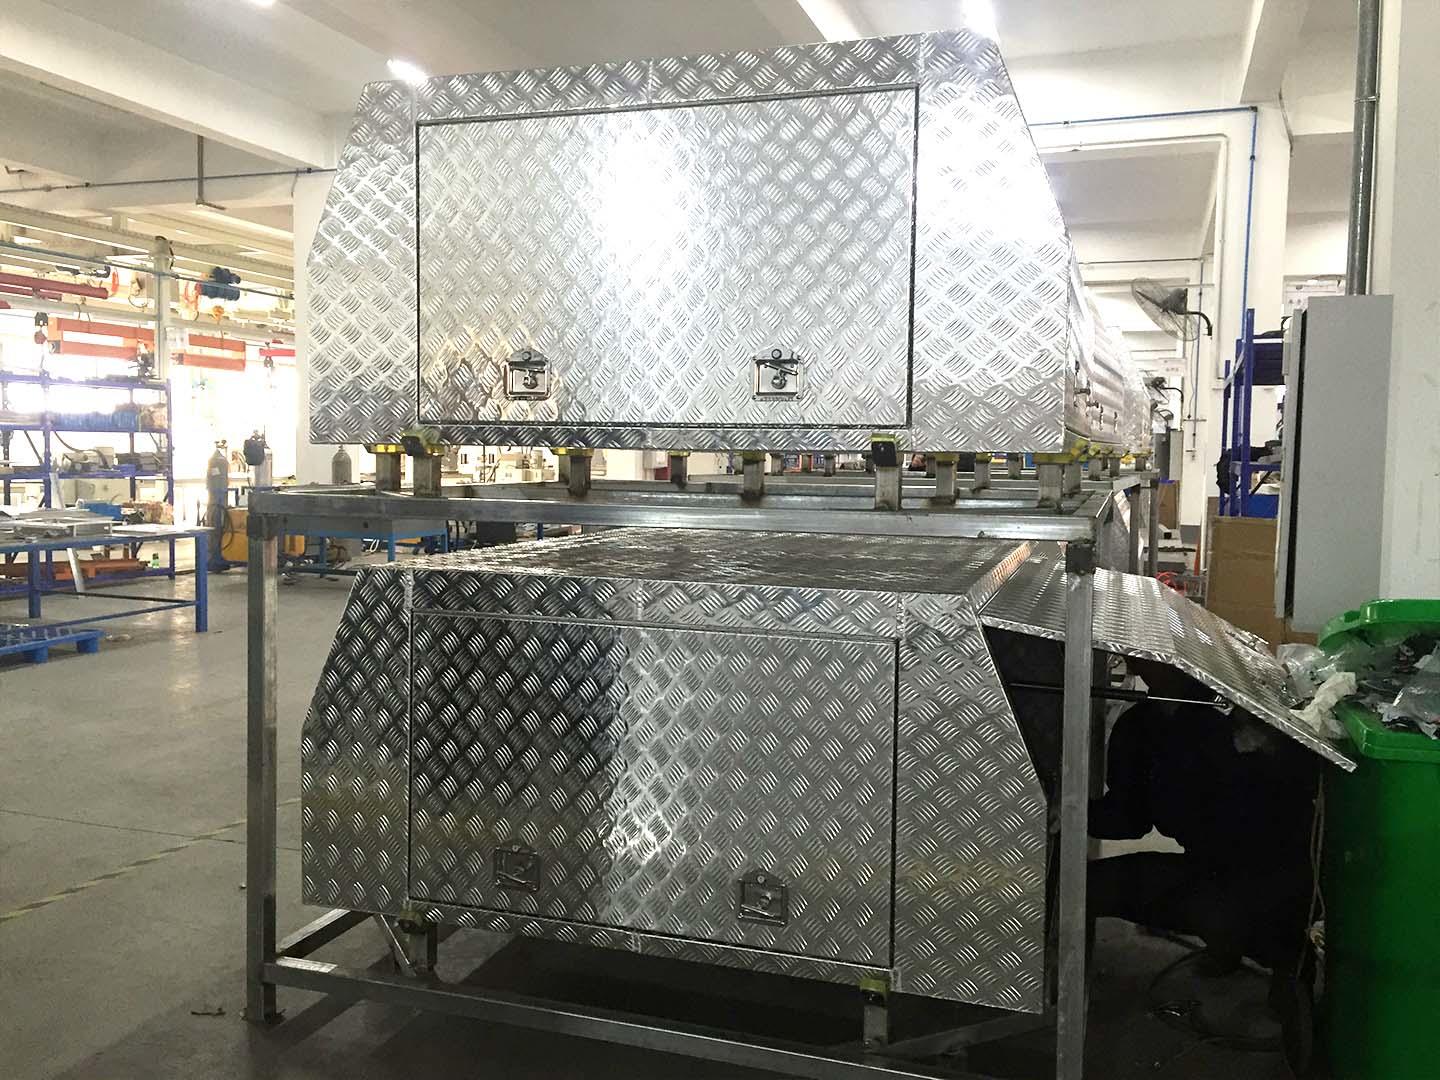 Snowaves Mechanical Custom aluminum truck tool boxes factory for picnics